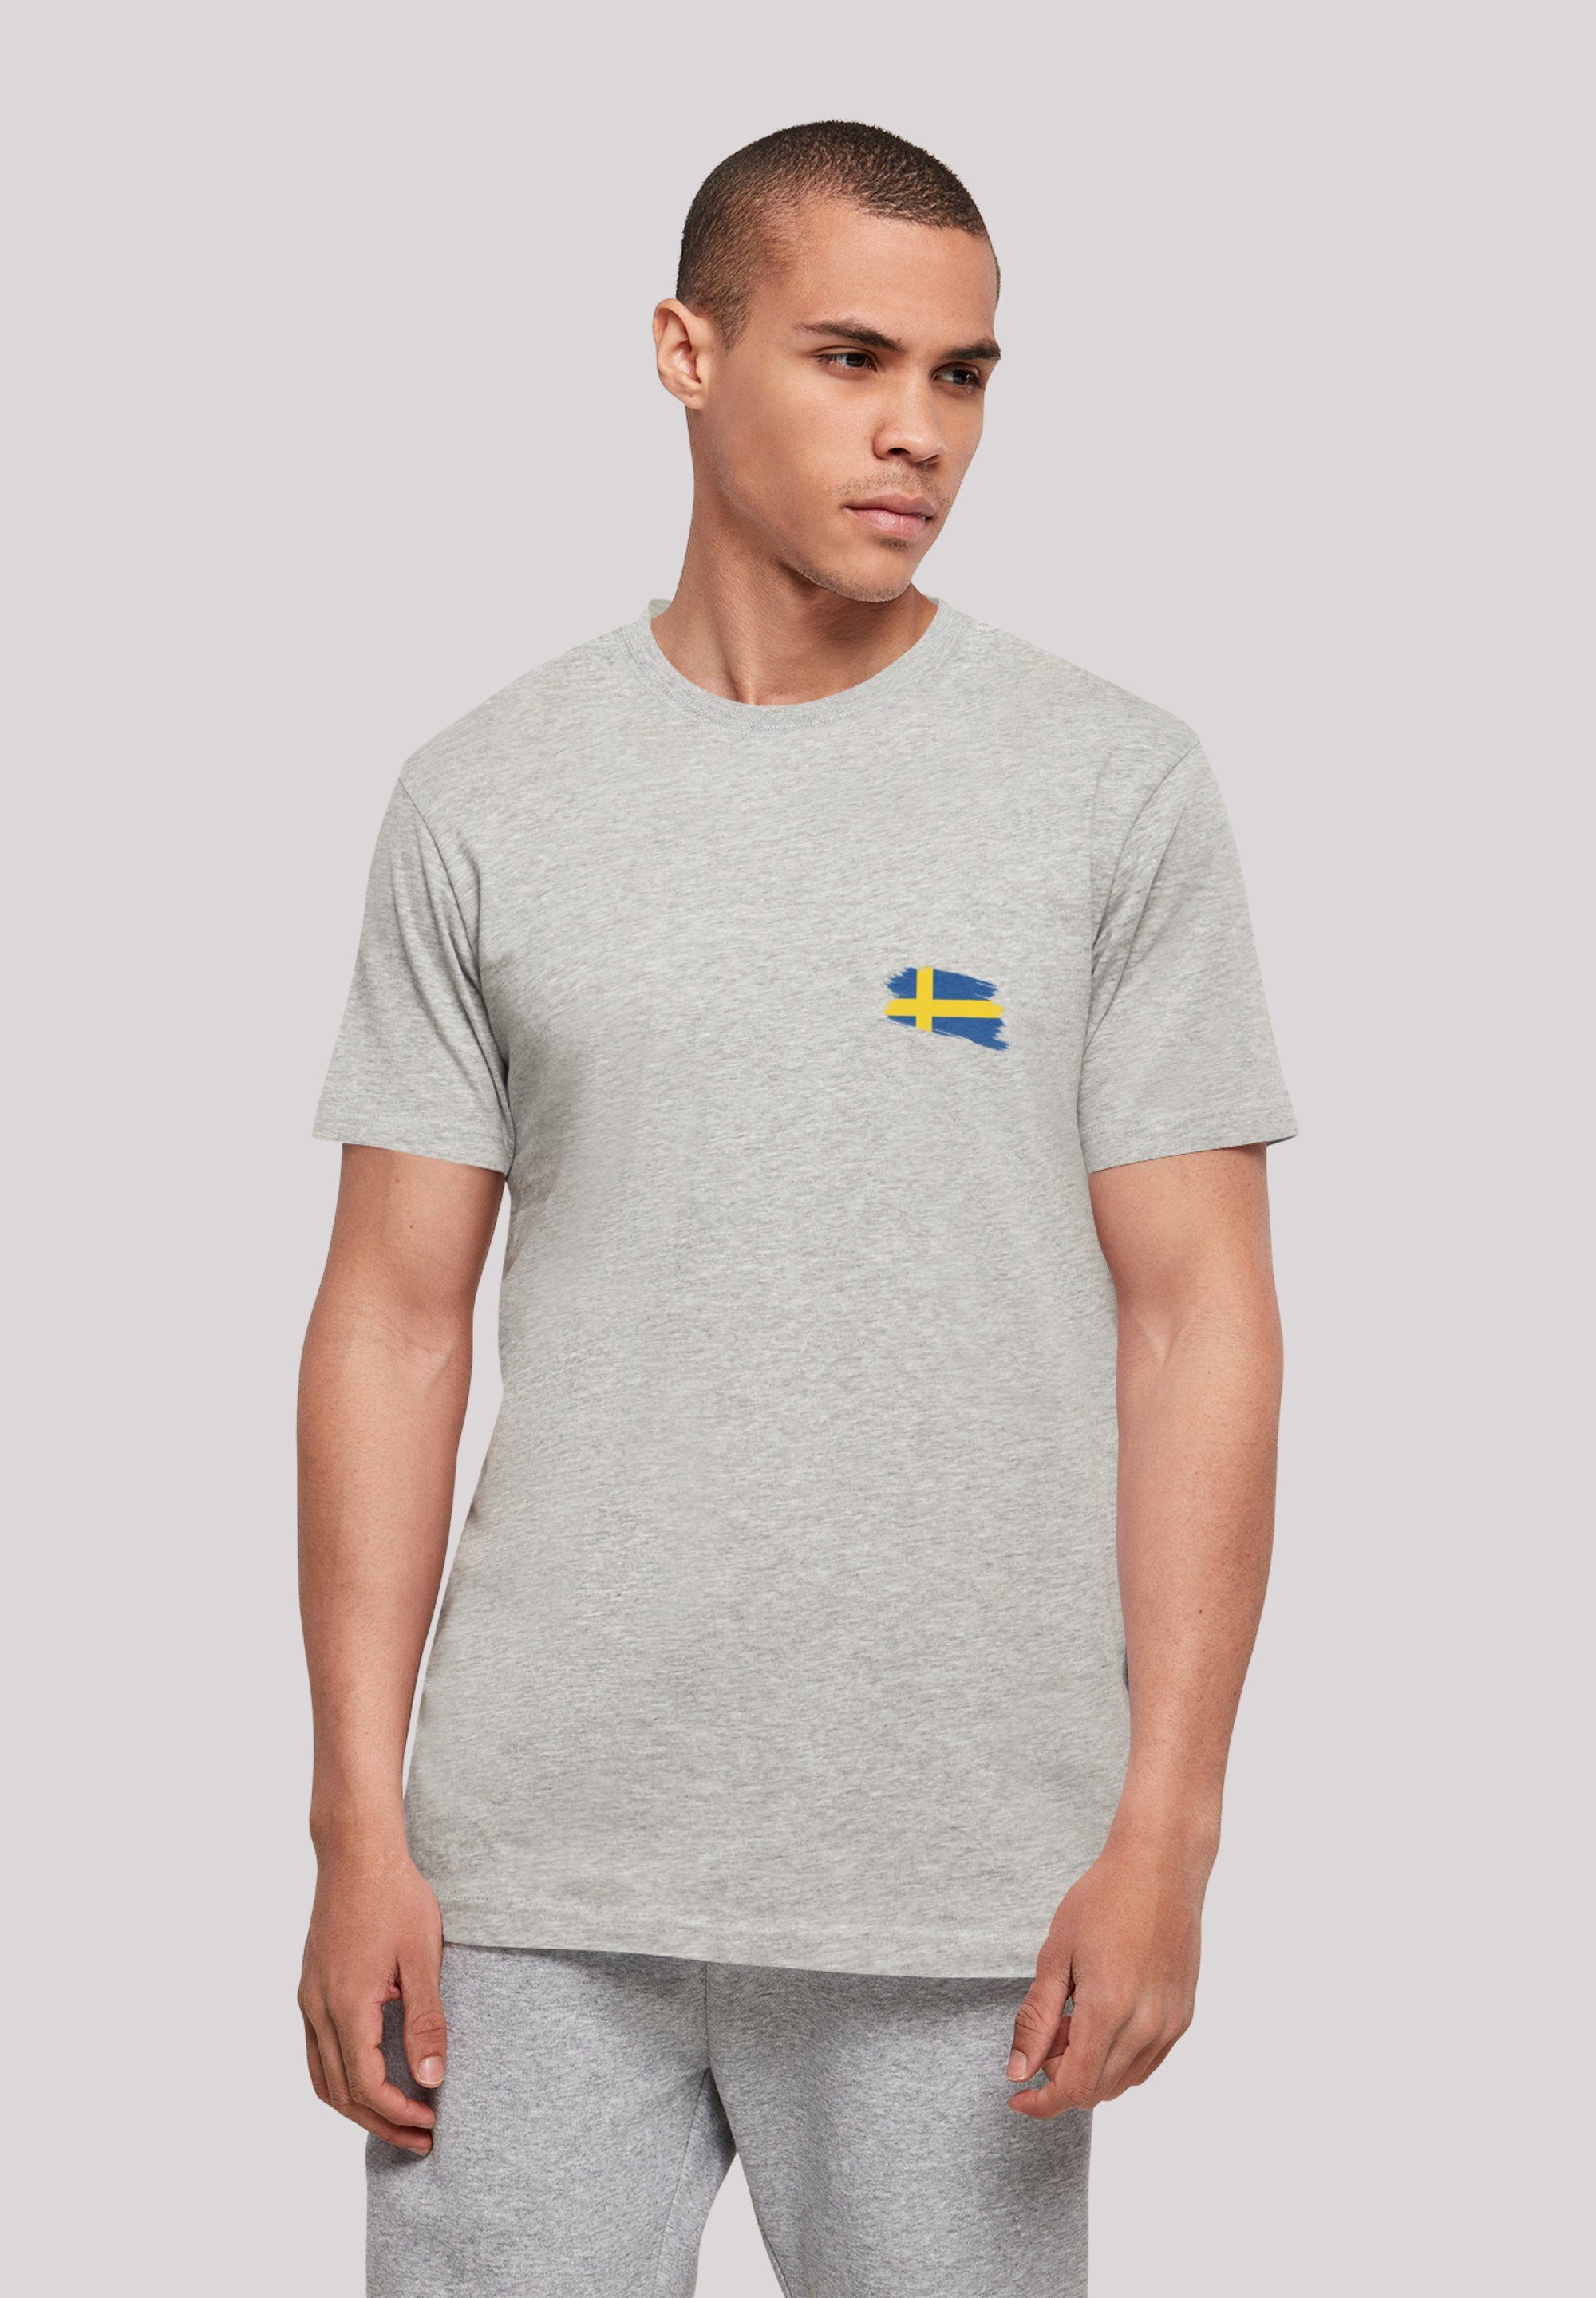 F4NT4STIC T-Shirt Schweden grey Print Sweden Flagge heather